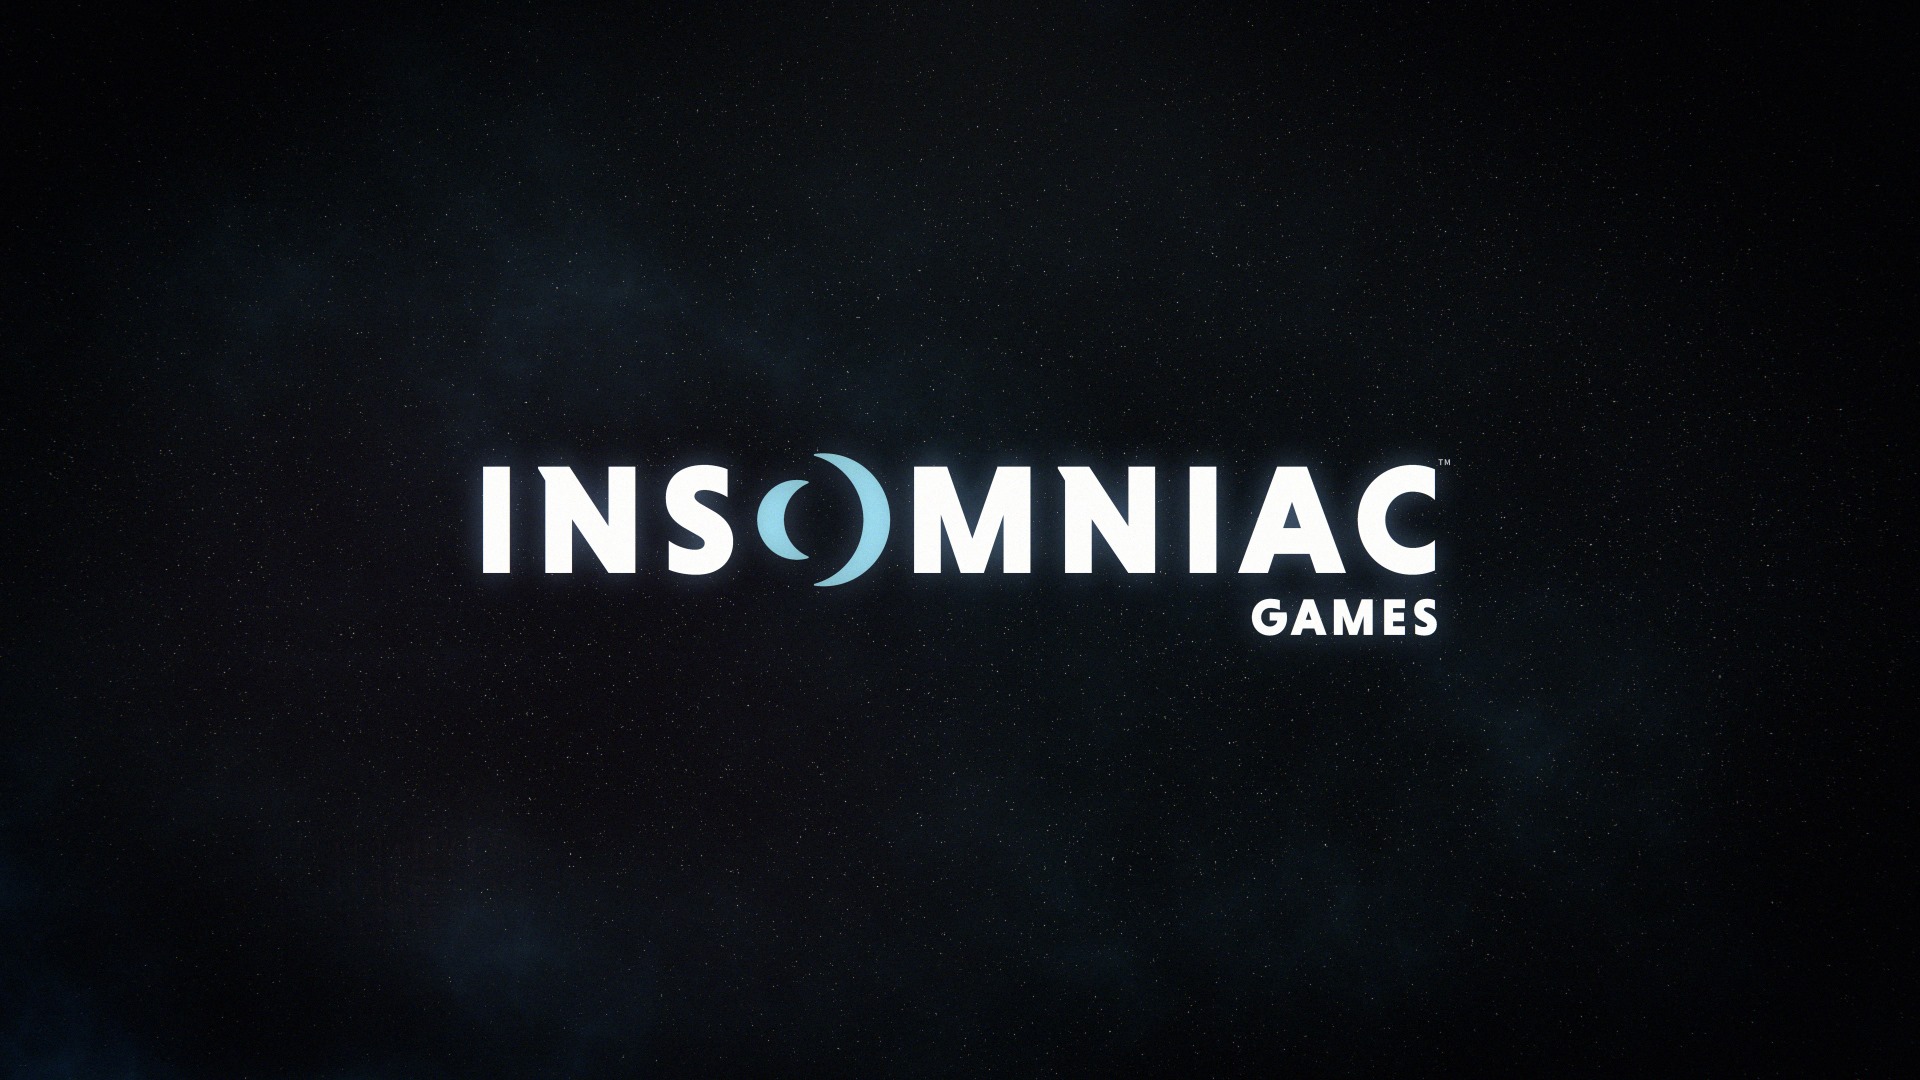 تشتري سوني ألعاب Spider-Man و Ratchet & Clank Developer Insomniac